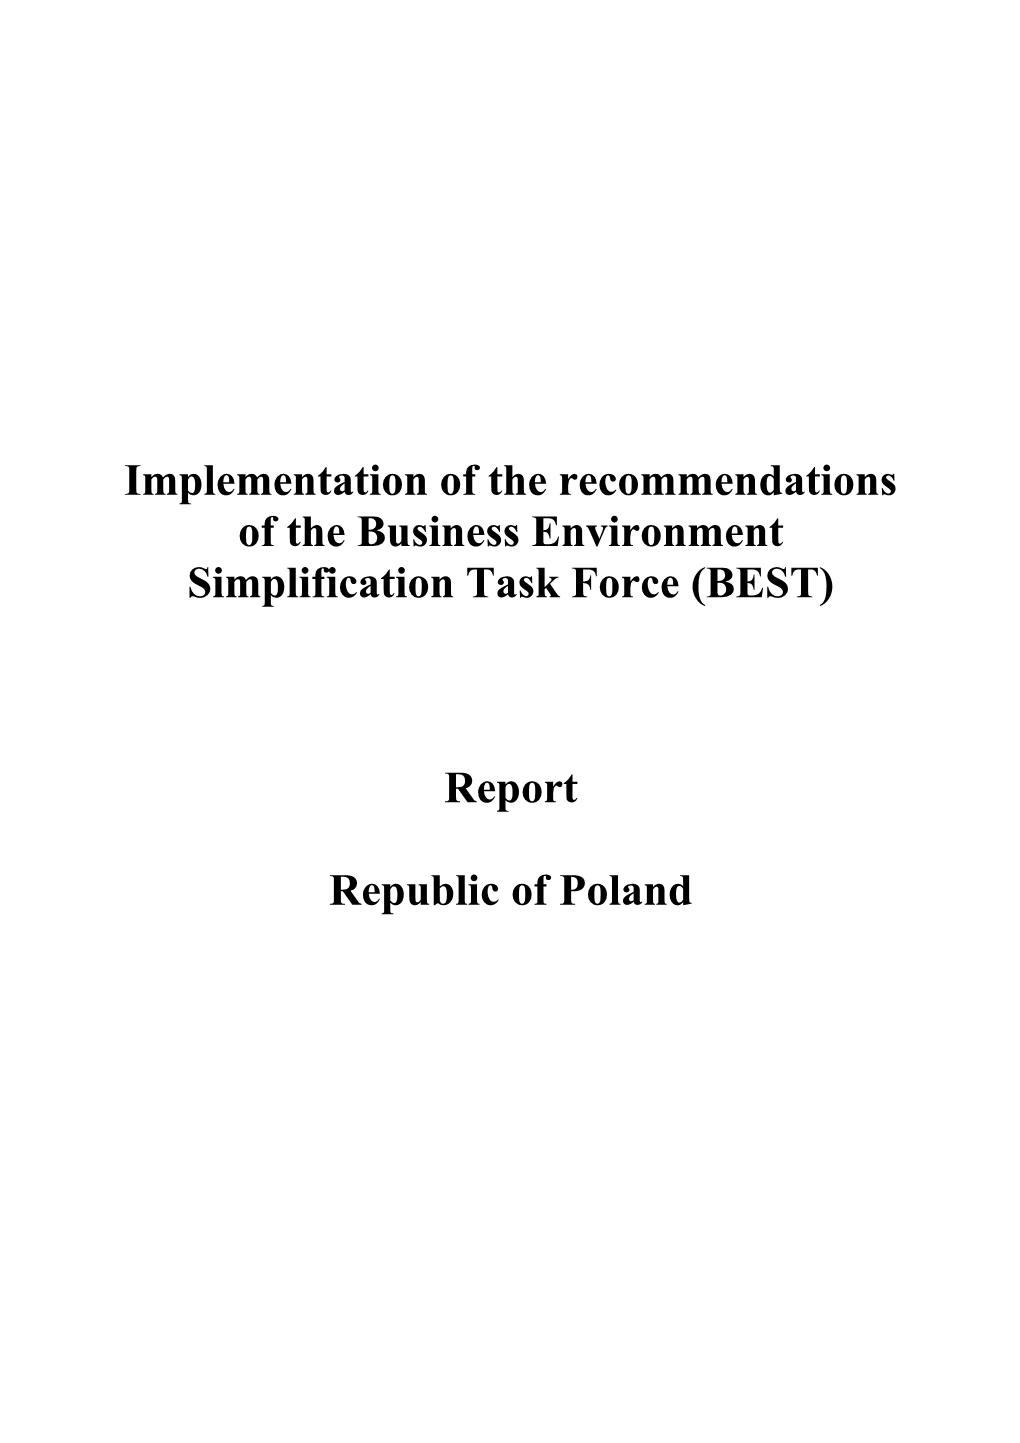 Information on Policies Regarding Companies in Poland